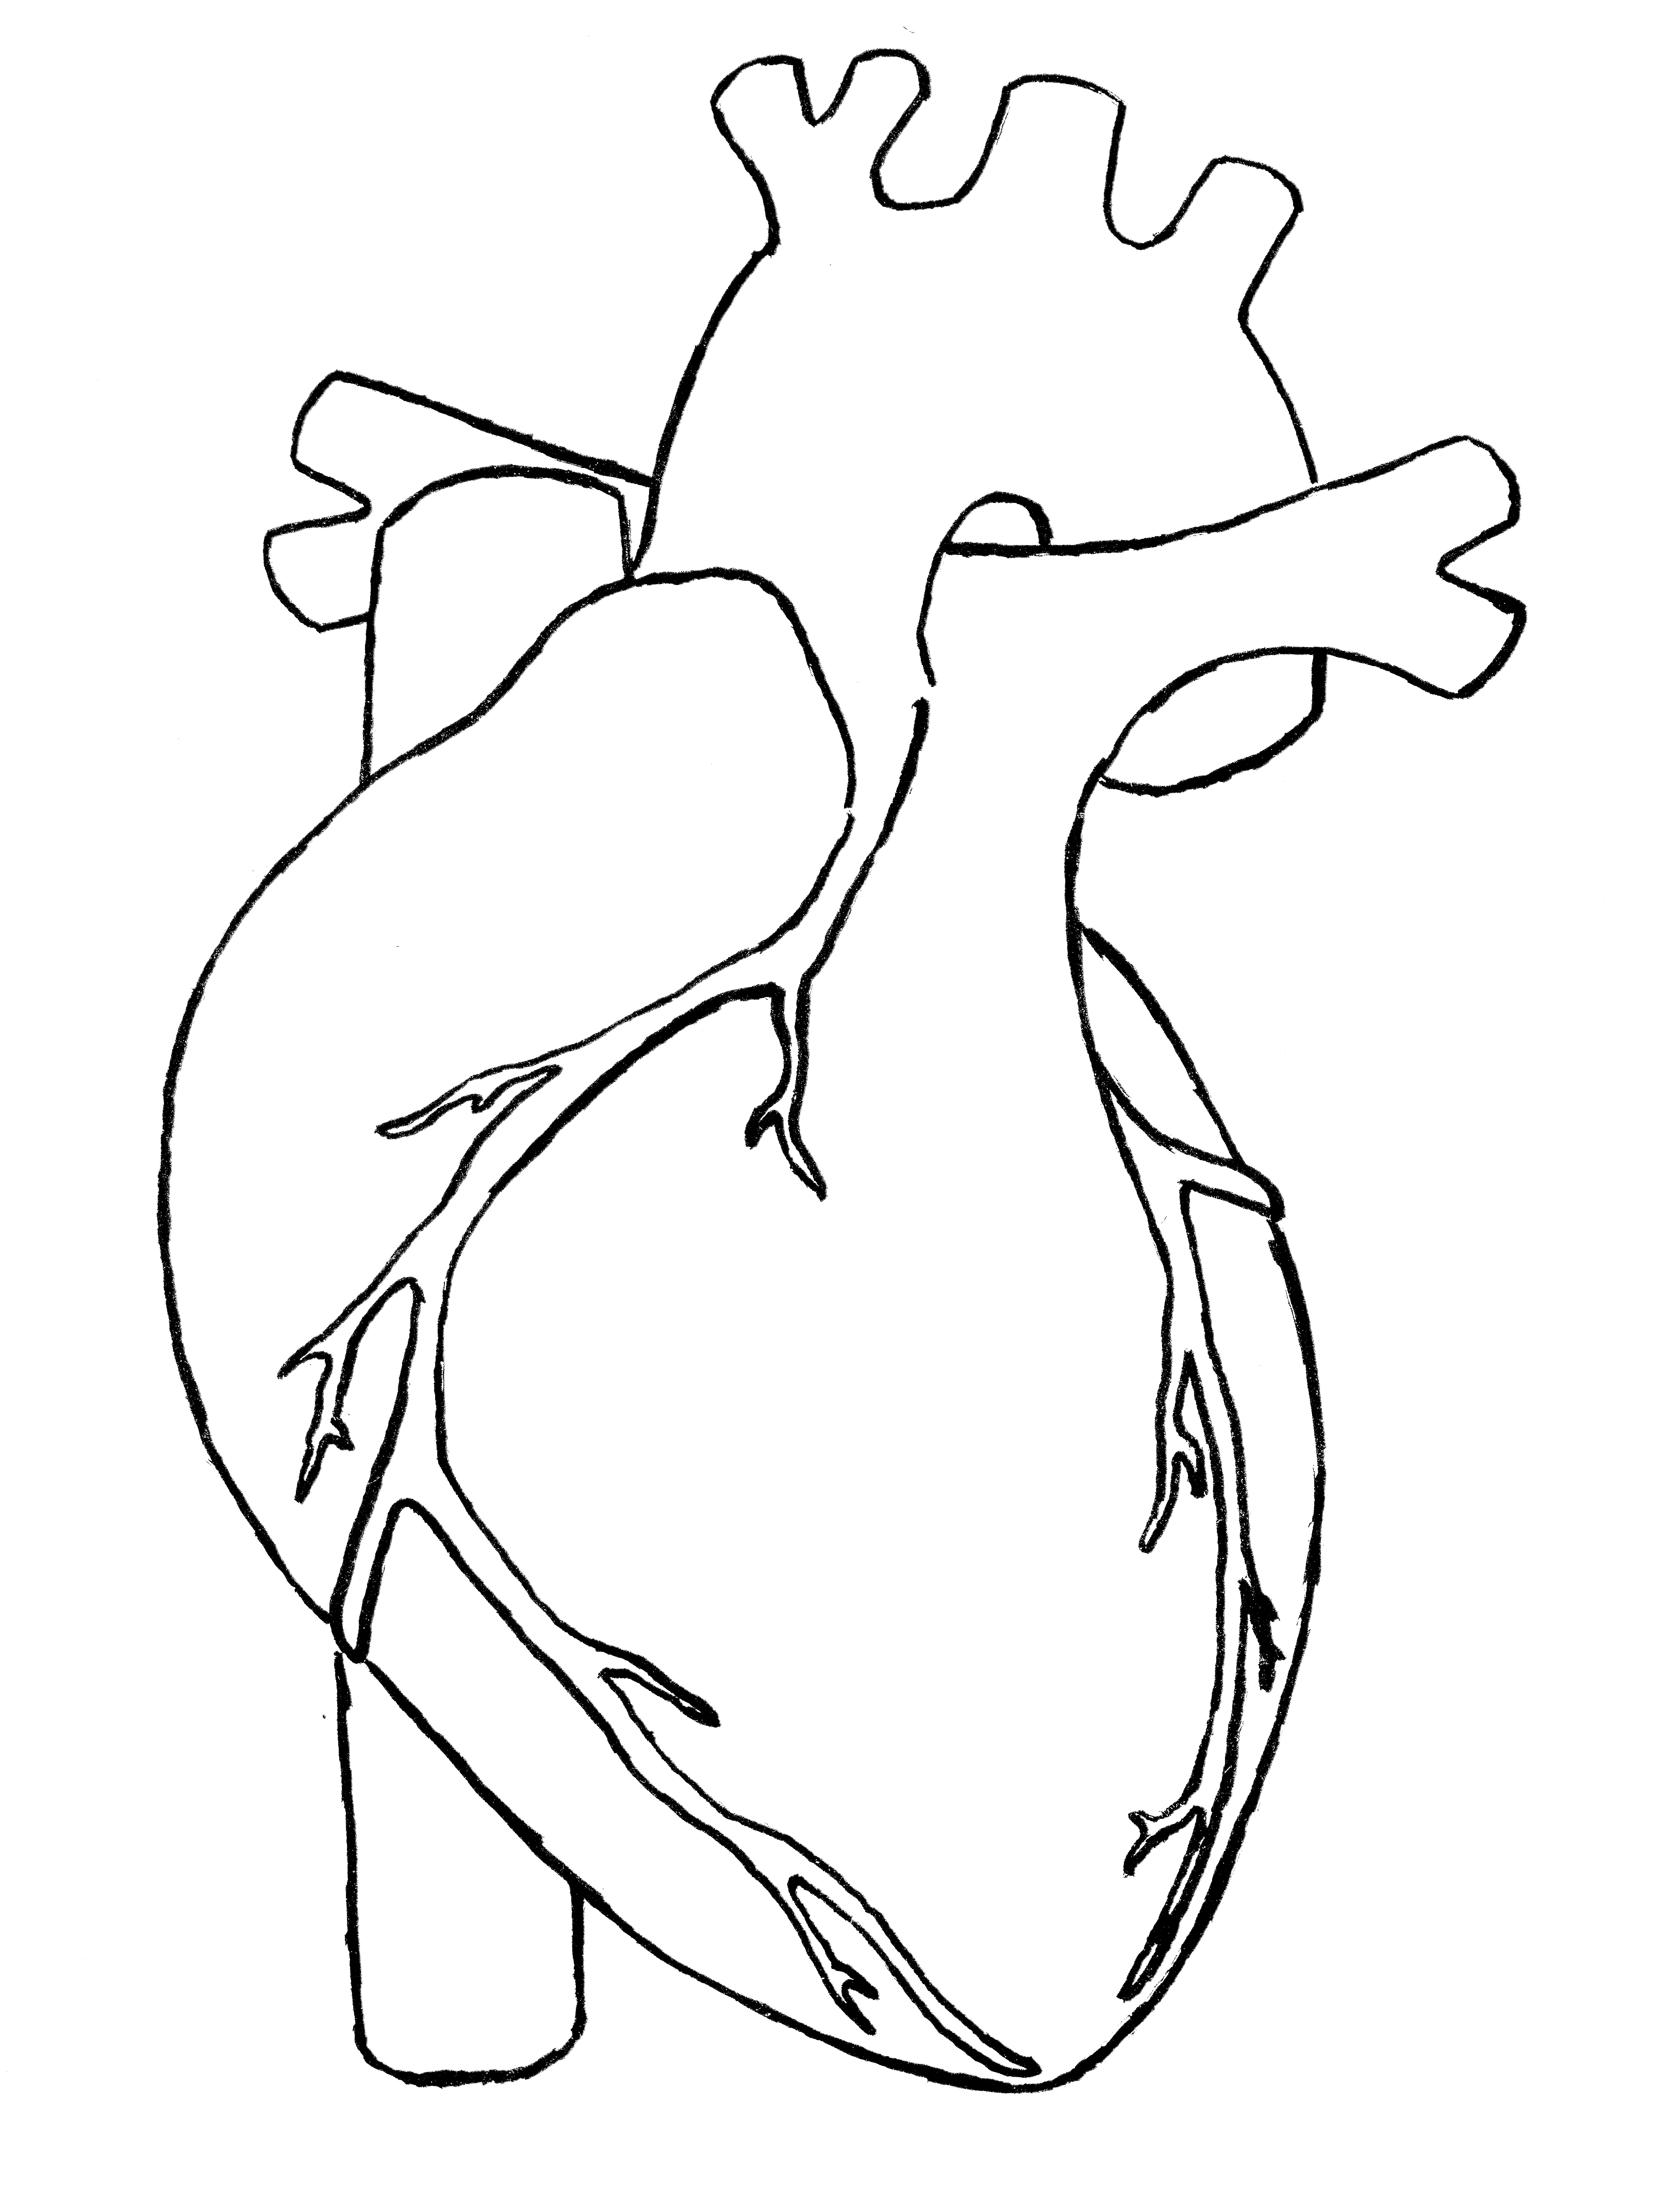 Anatomical heart clipart.